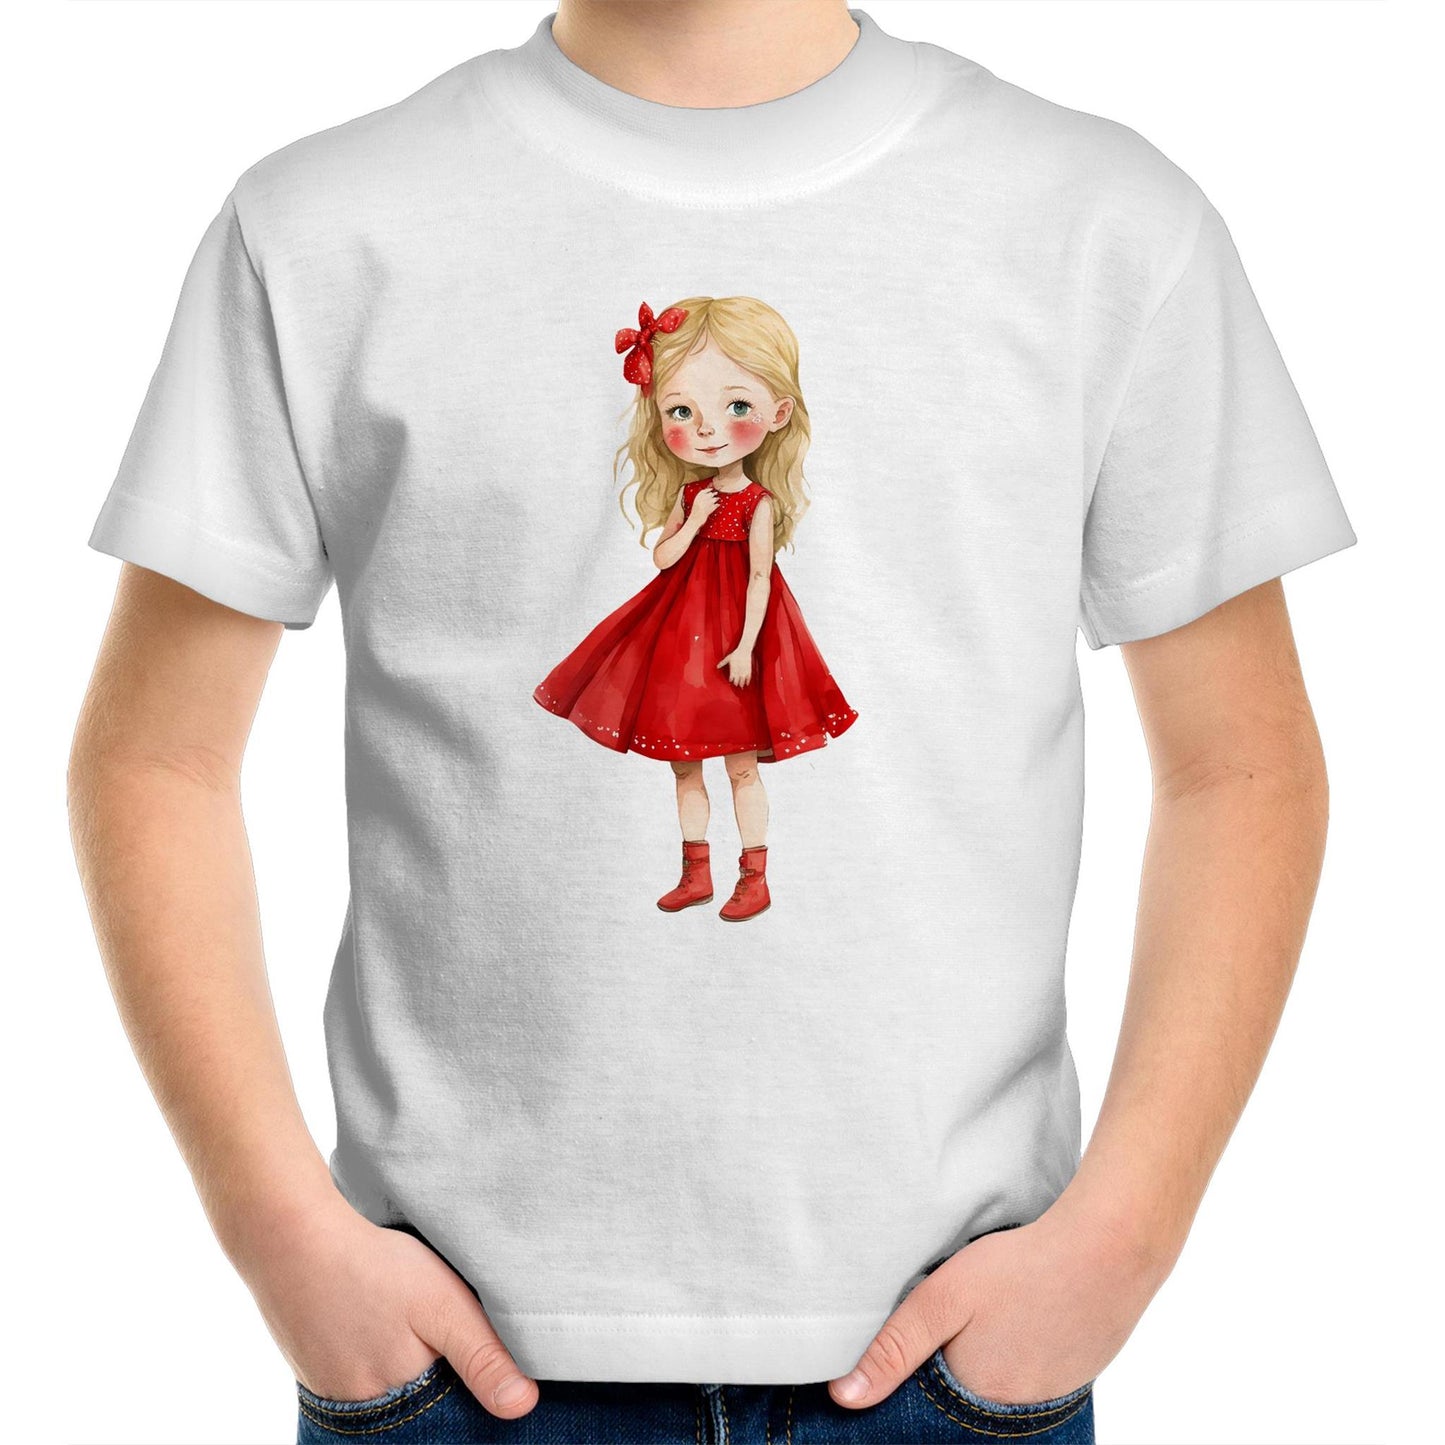 Girl's Red Dress Unisex Kids Youth Crew T-Shirt